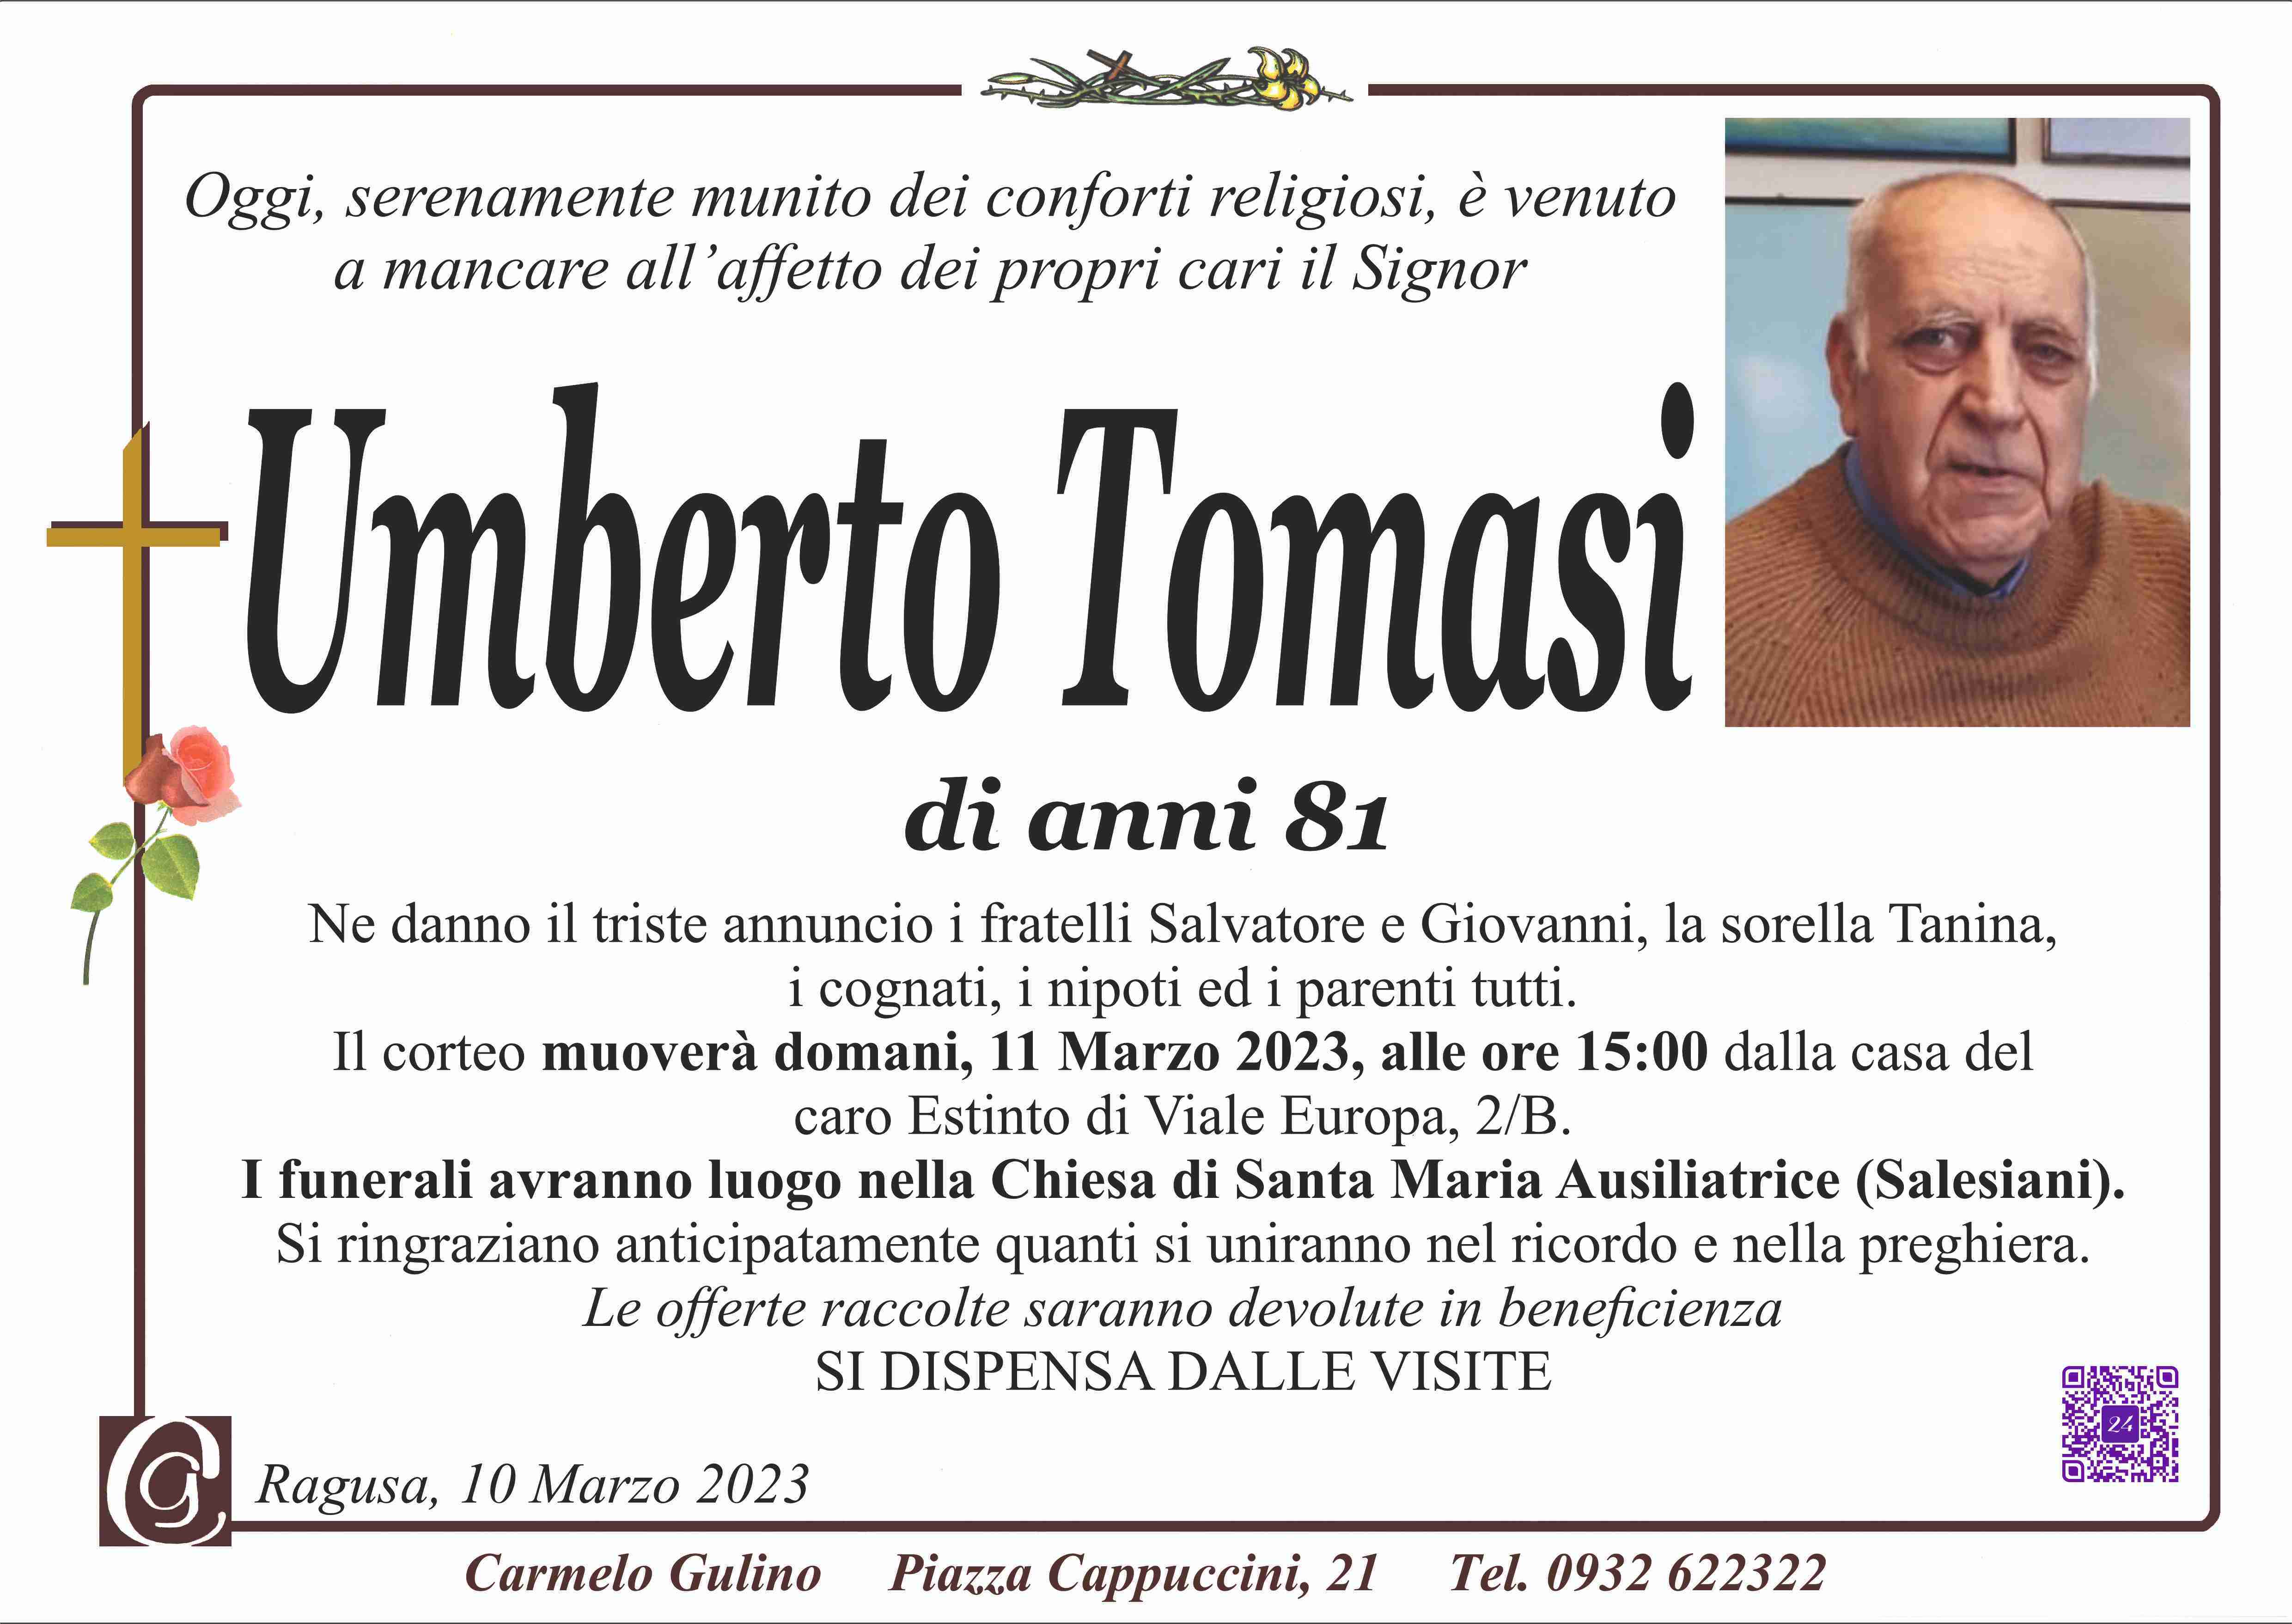 Umberto Tomasi